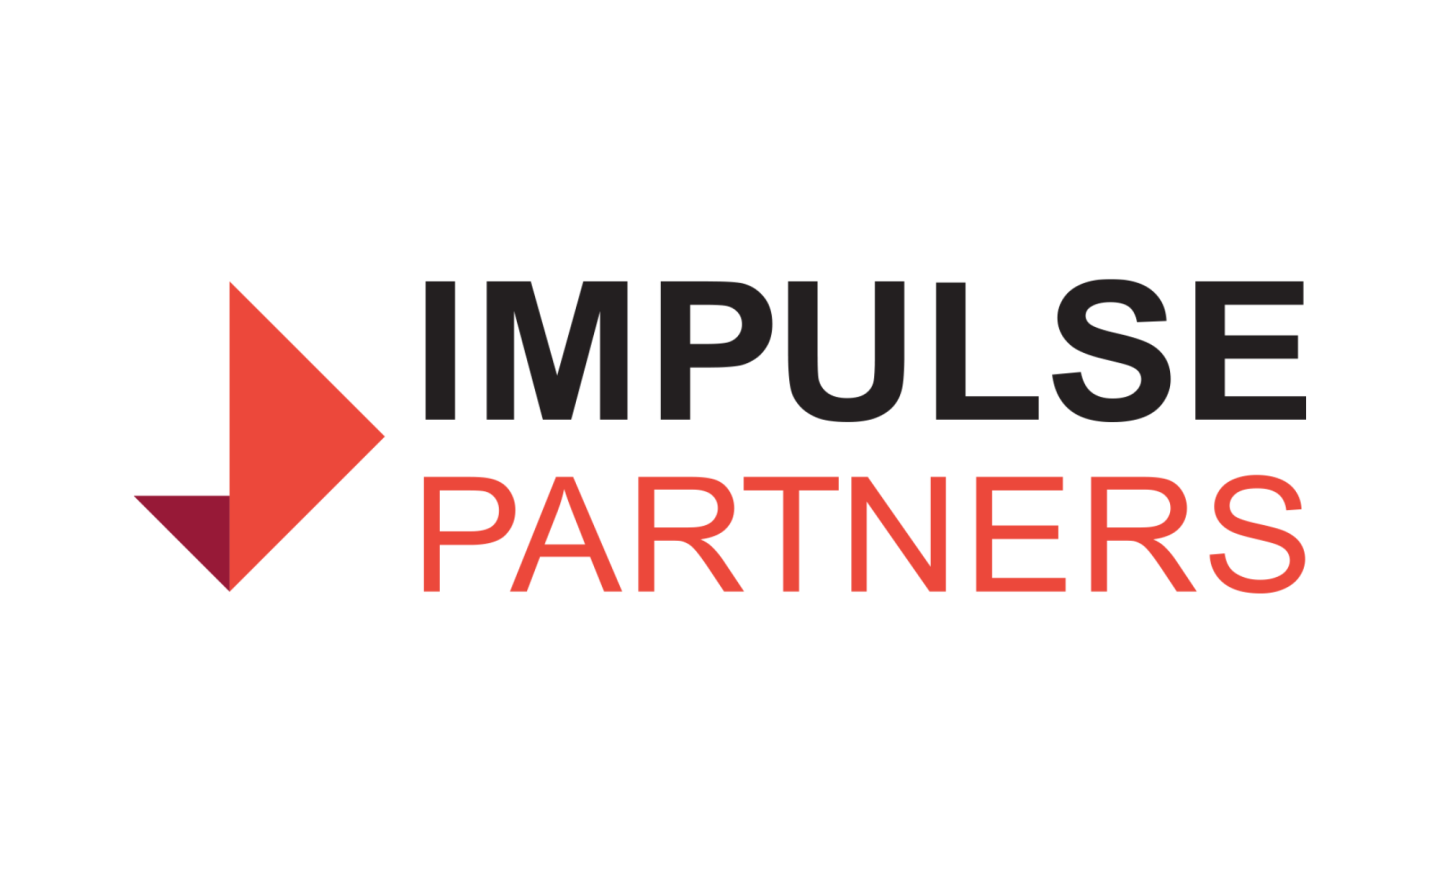 Impulse Partners